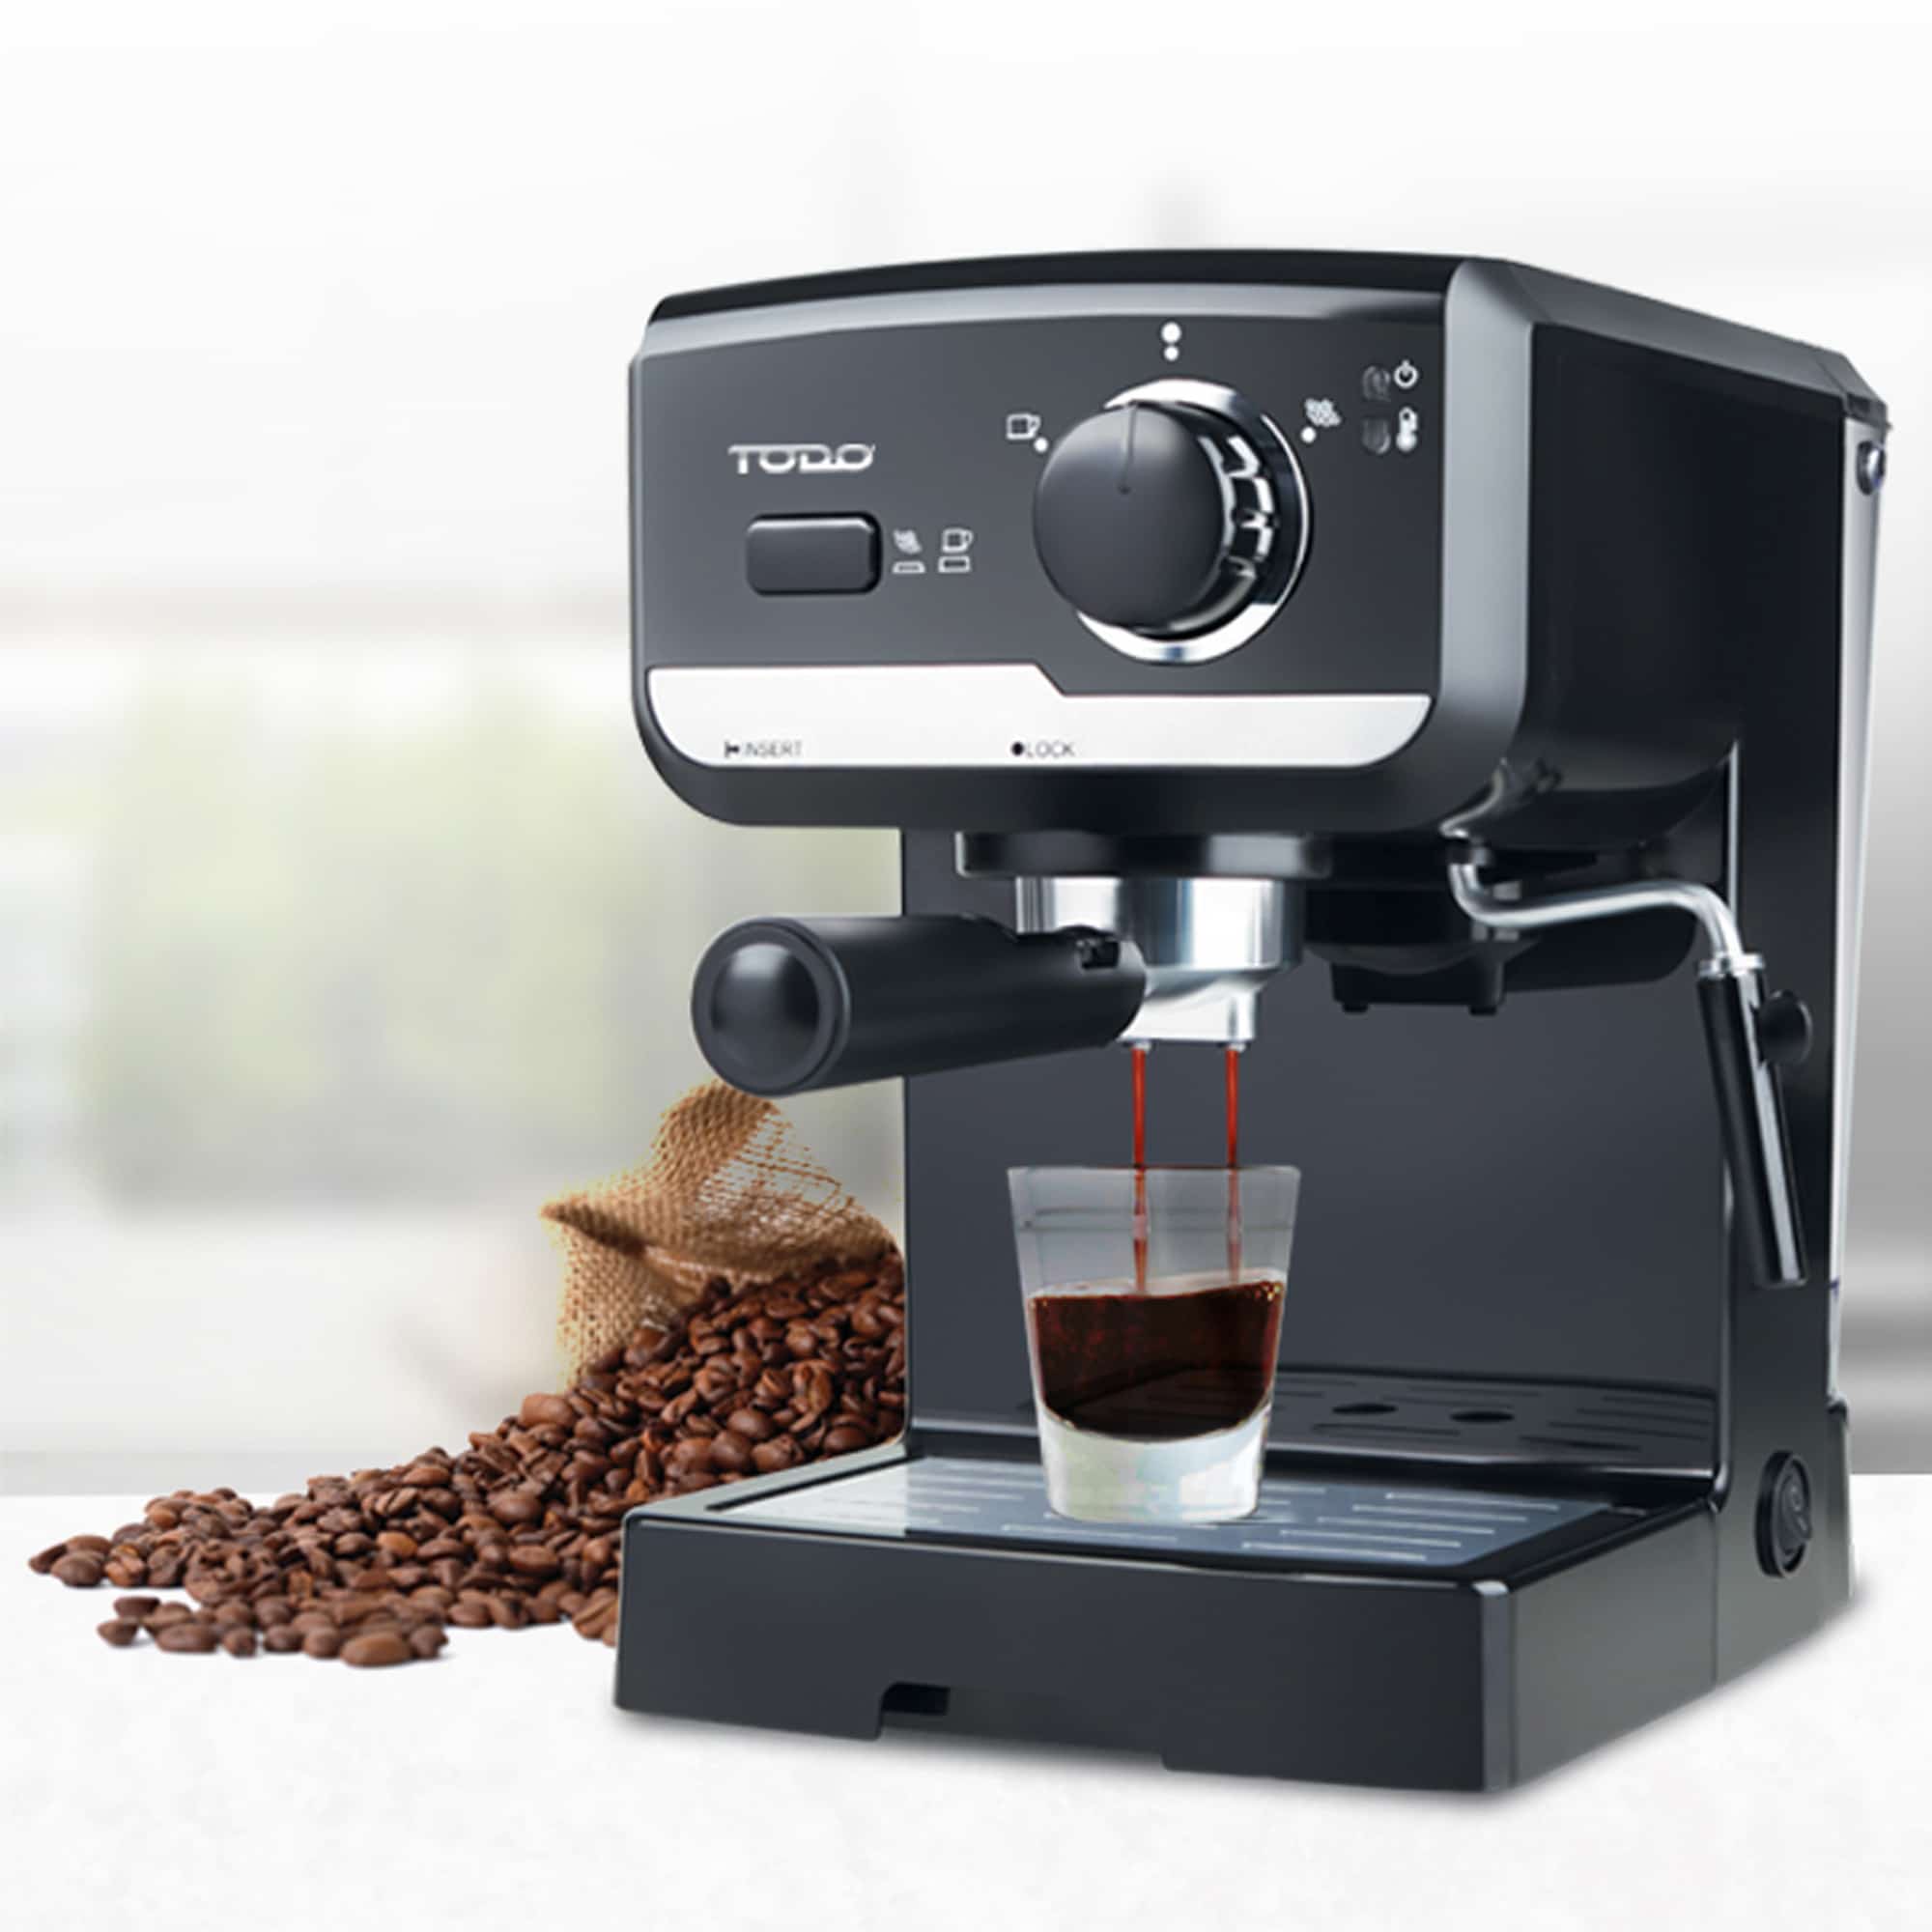 NEW Black Italian Espresso Coffee Machine